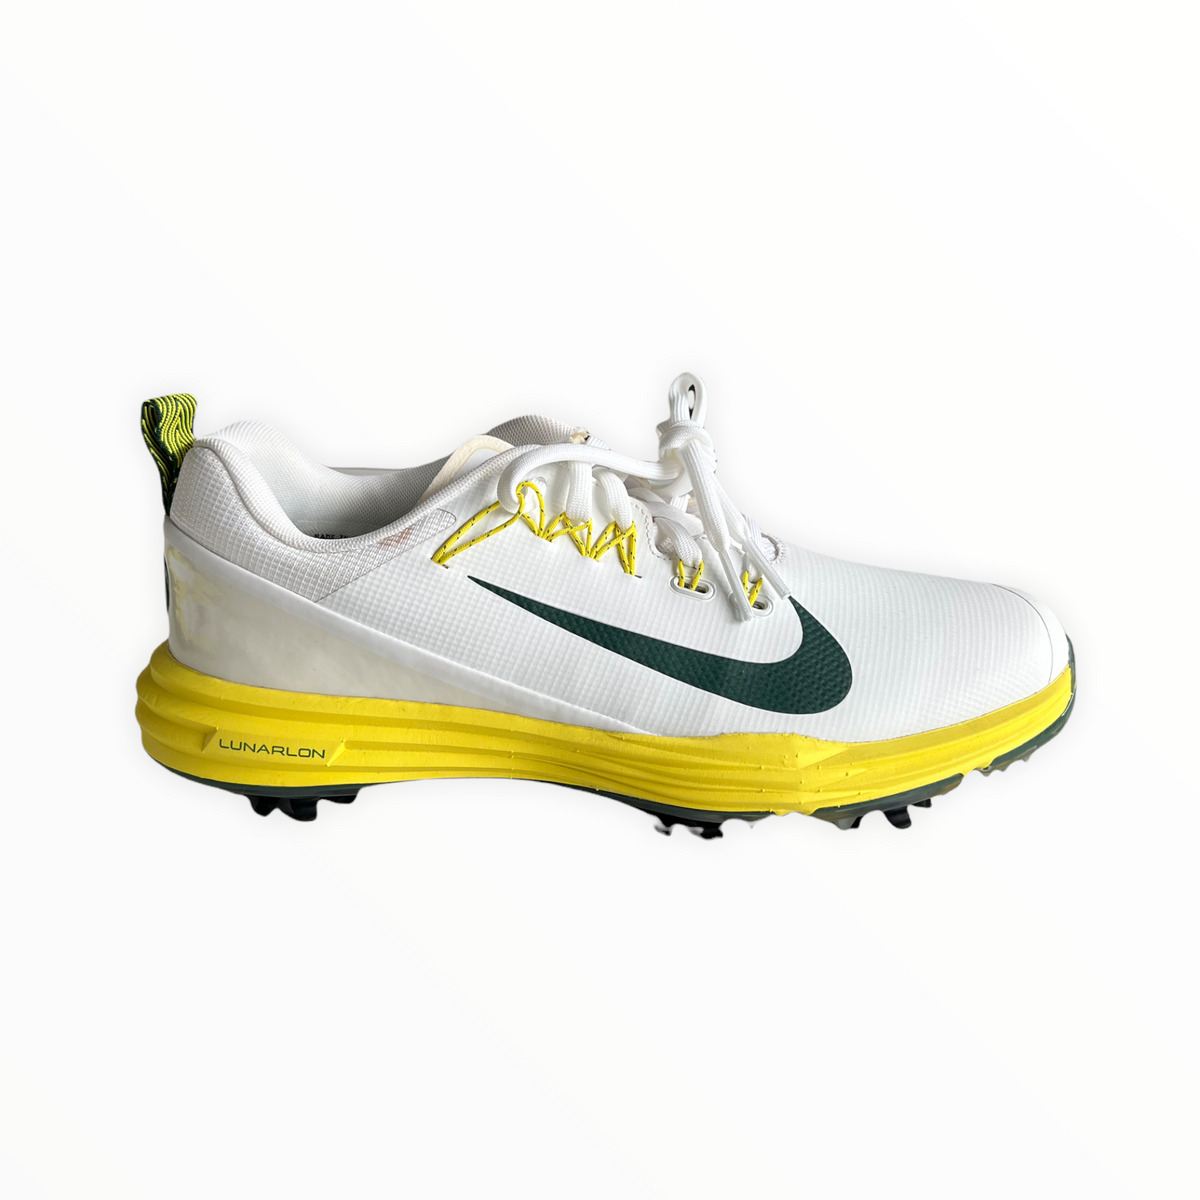 White golf shoes turning yellow - GolfBuzz